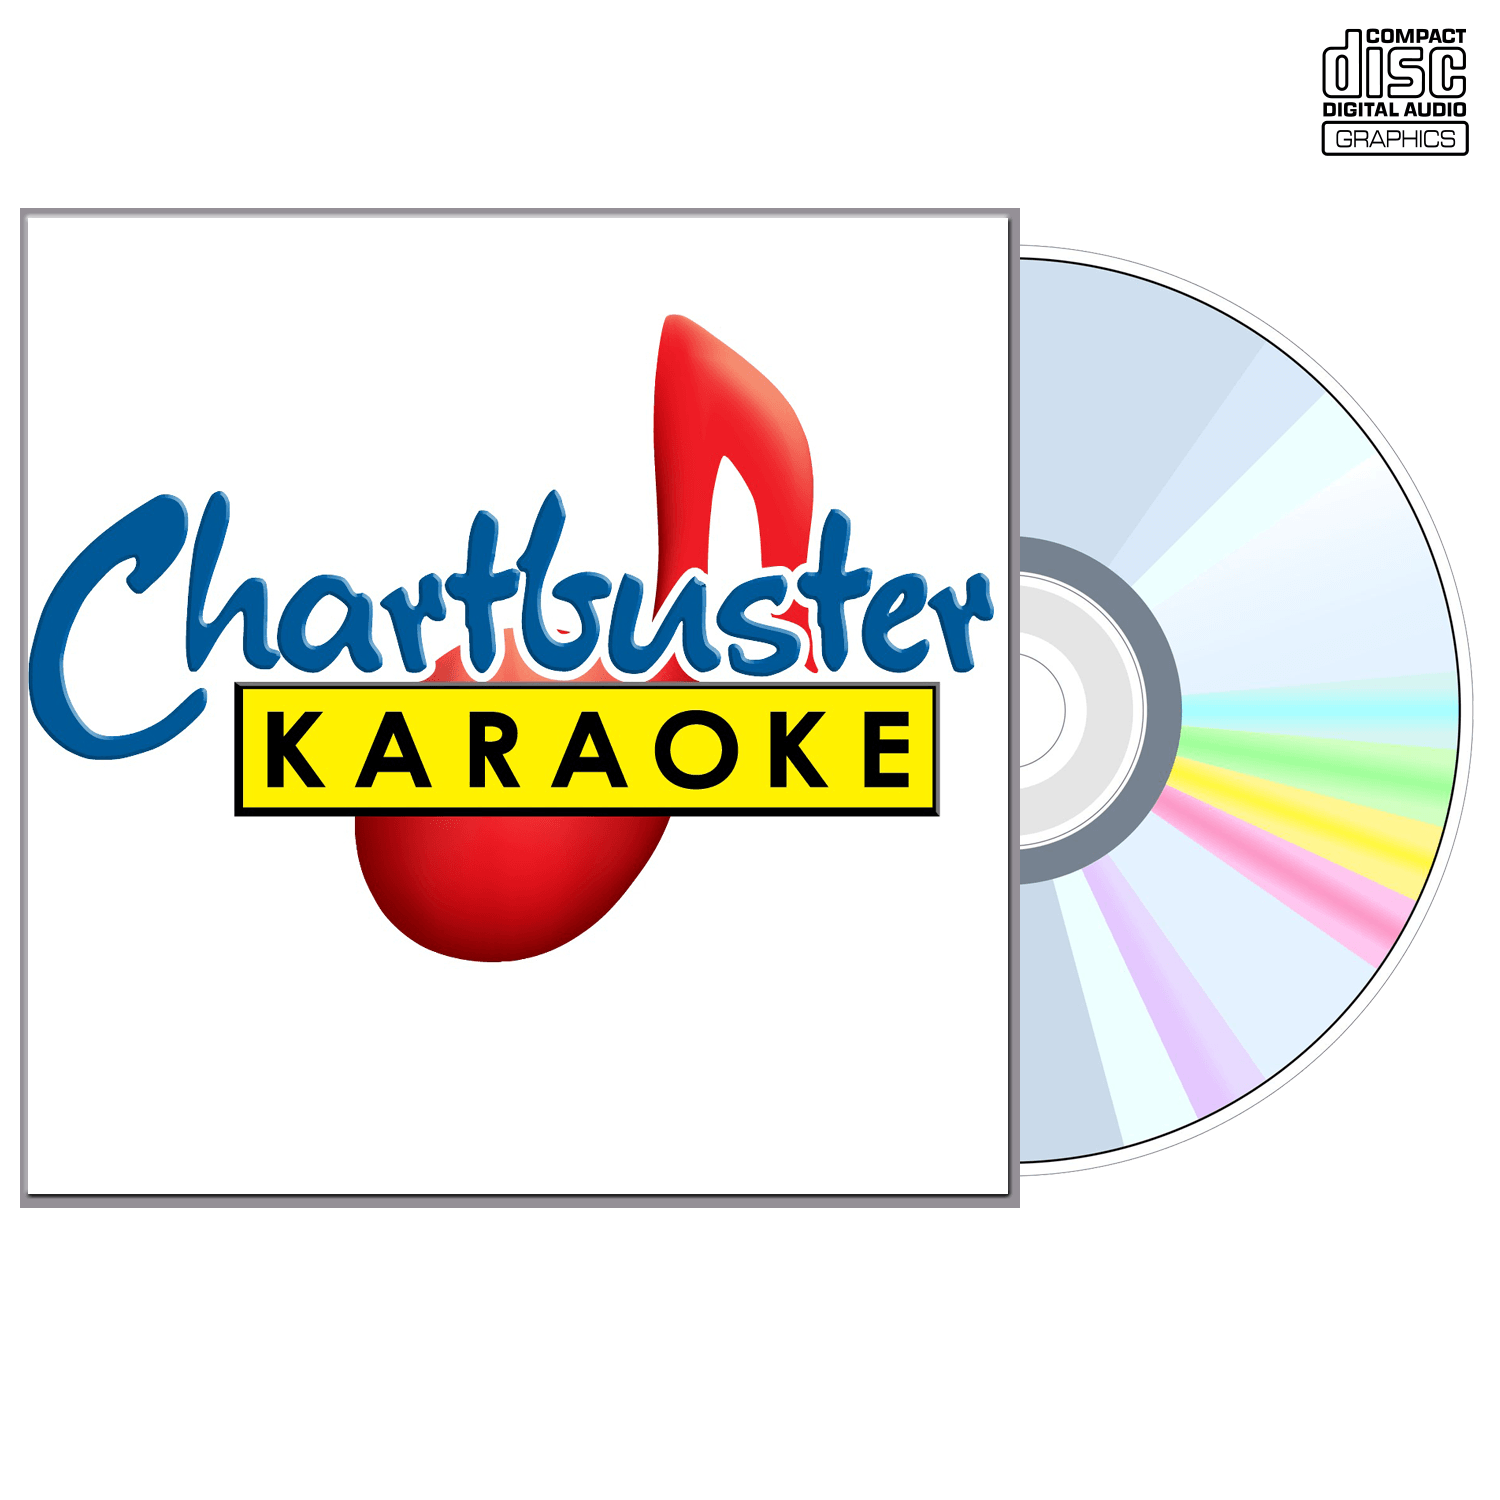 Sounds Of Sixties Vol 08 - CD+G - Chartbuster Karaoke - Karaoke Home Entertainment